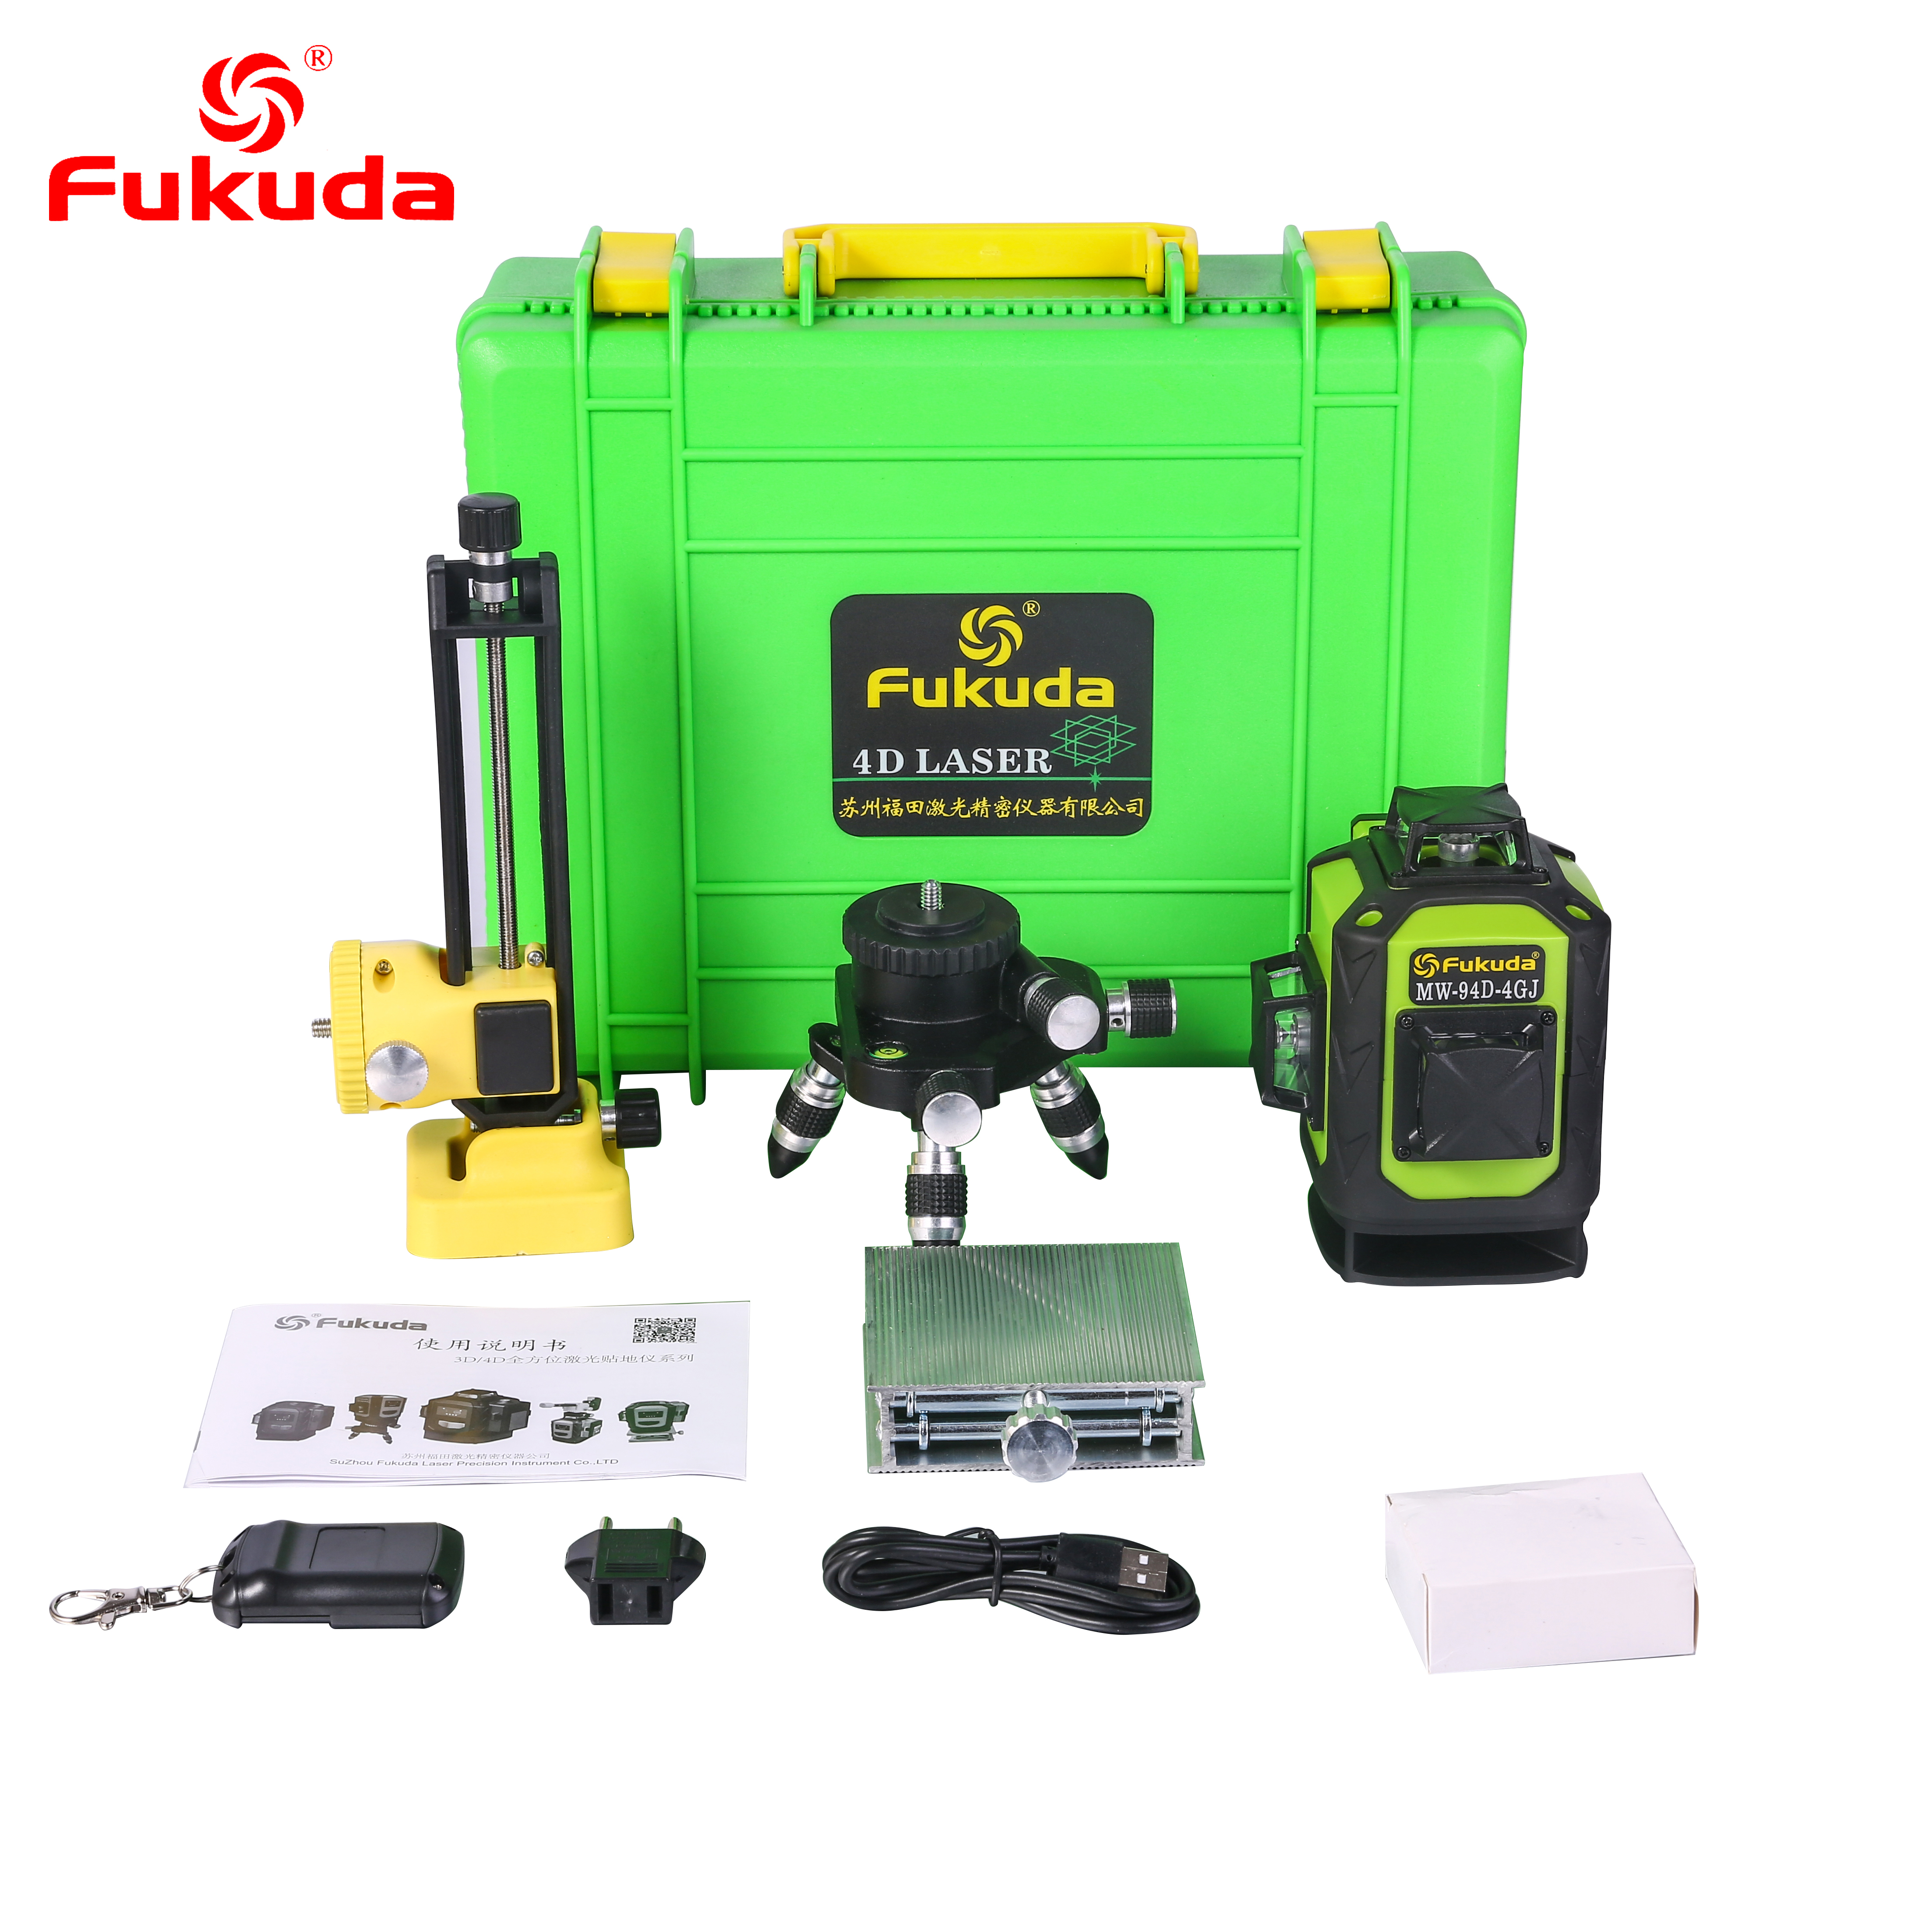 Fukuda 4d mw 94d 4gx. Лазерный уровень Fukuda MW-94d-4gx. Лазерный уровень Fukuda 4d MW-94d-4gx 16 линий. Фукуда лазерный уровень 4д зеленый.